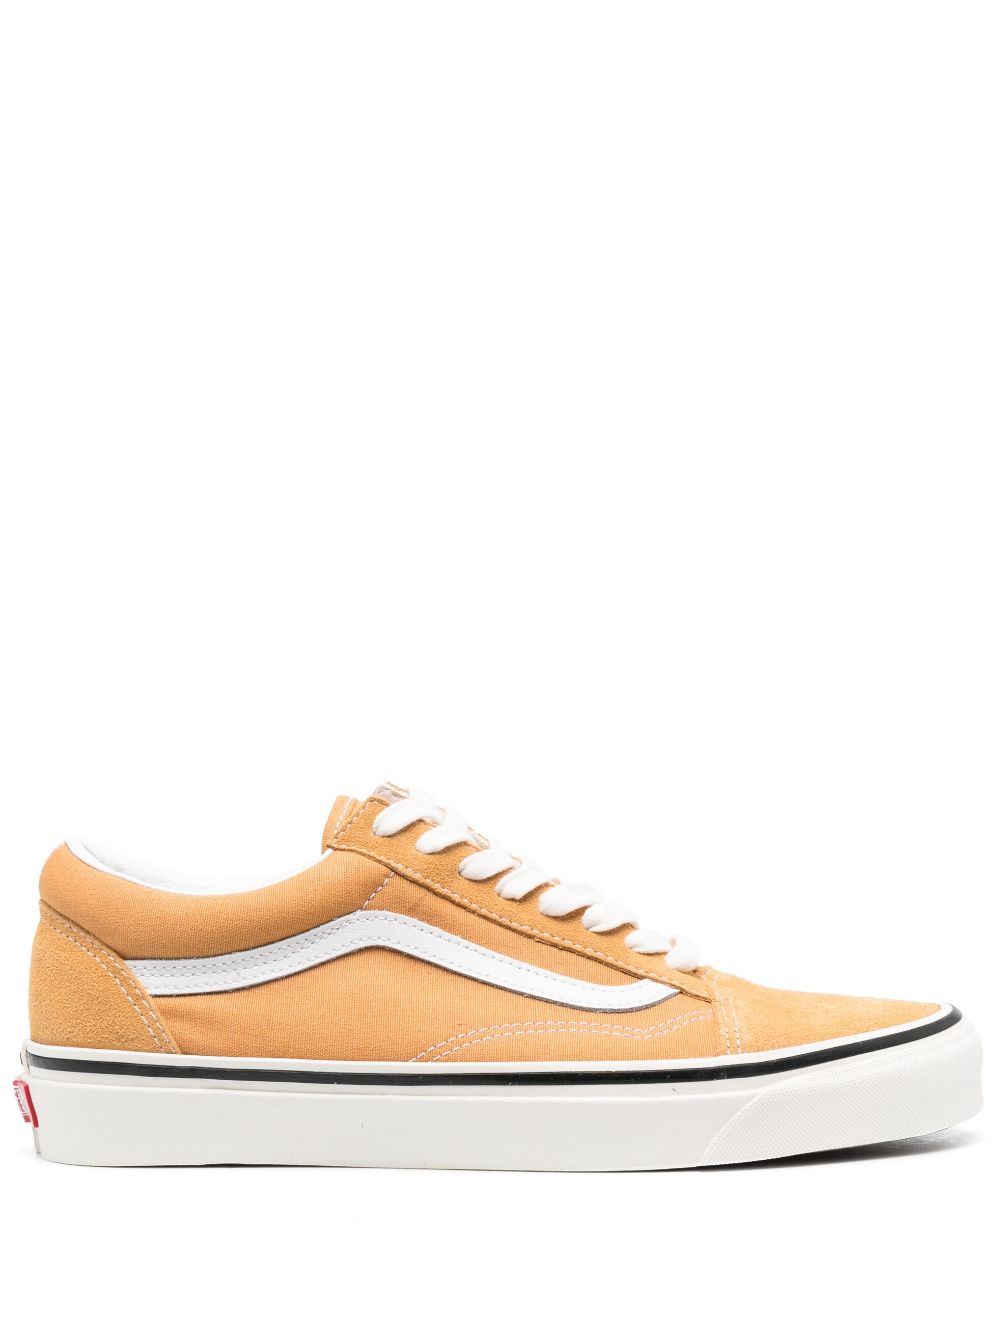 Vans Old Skool 36 DX two-tone sneakers - Yellow von Vans